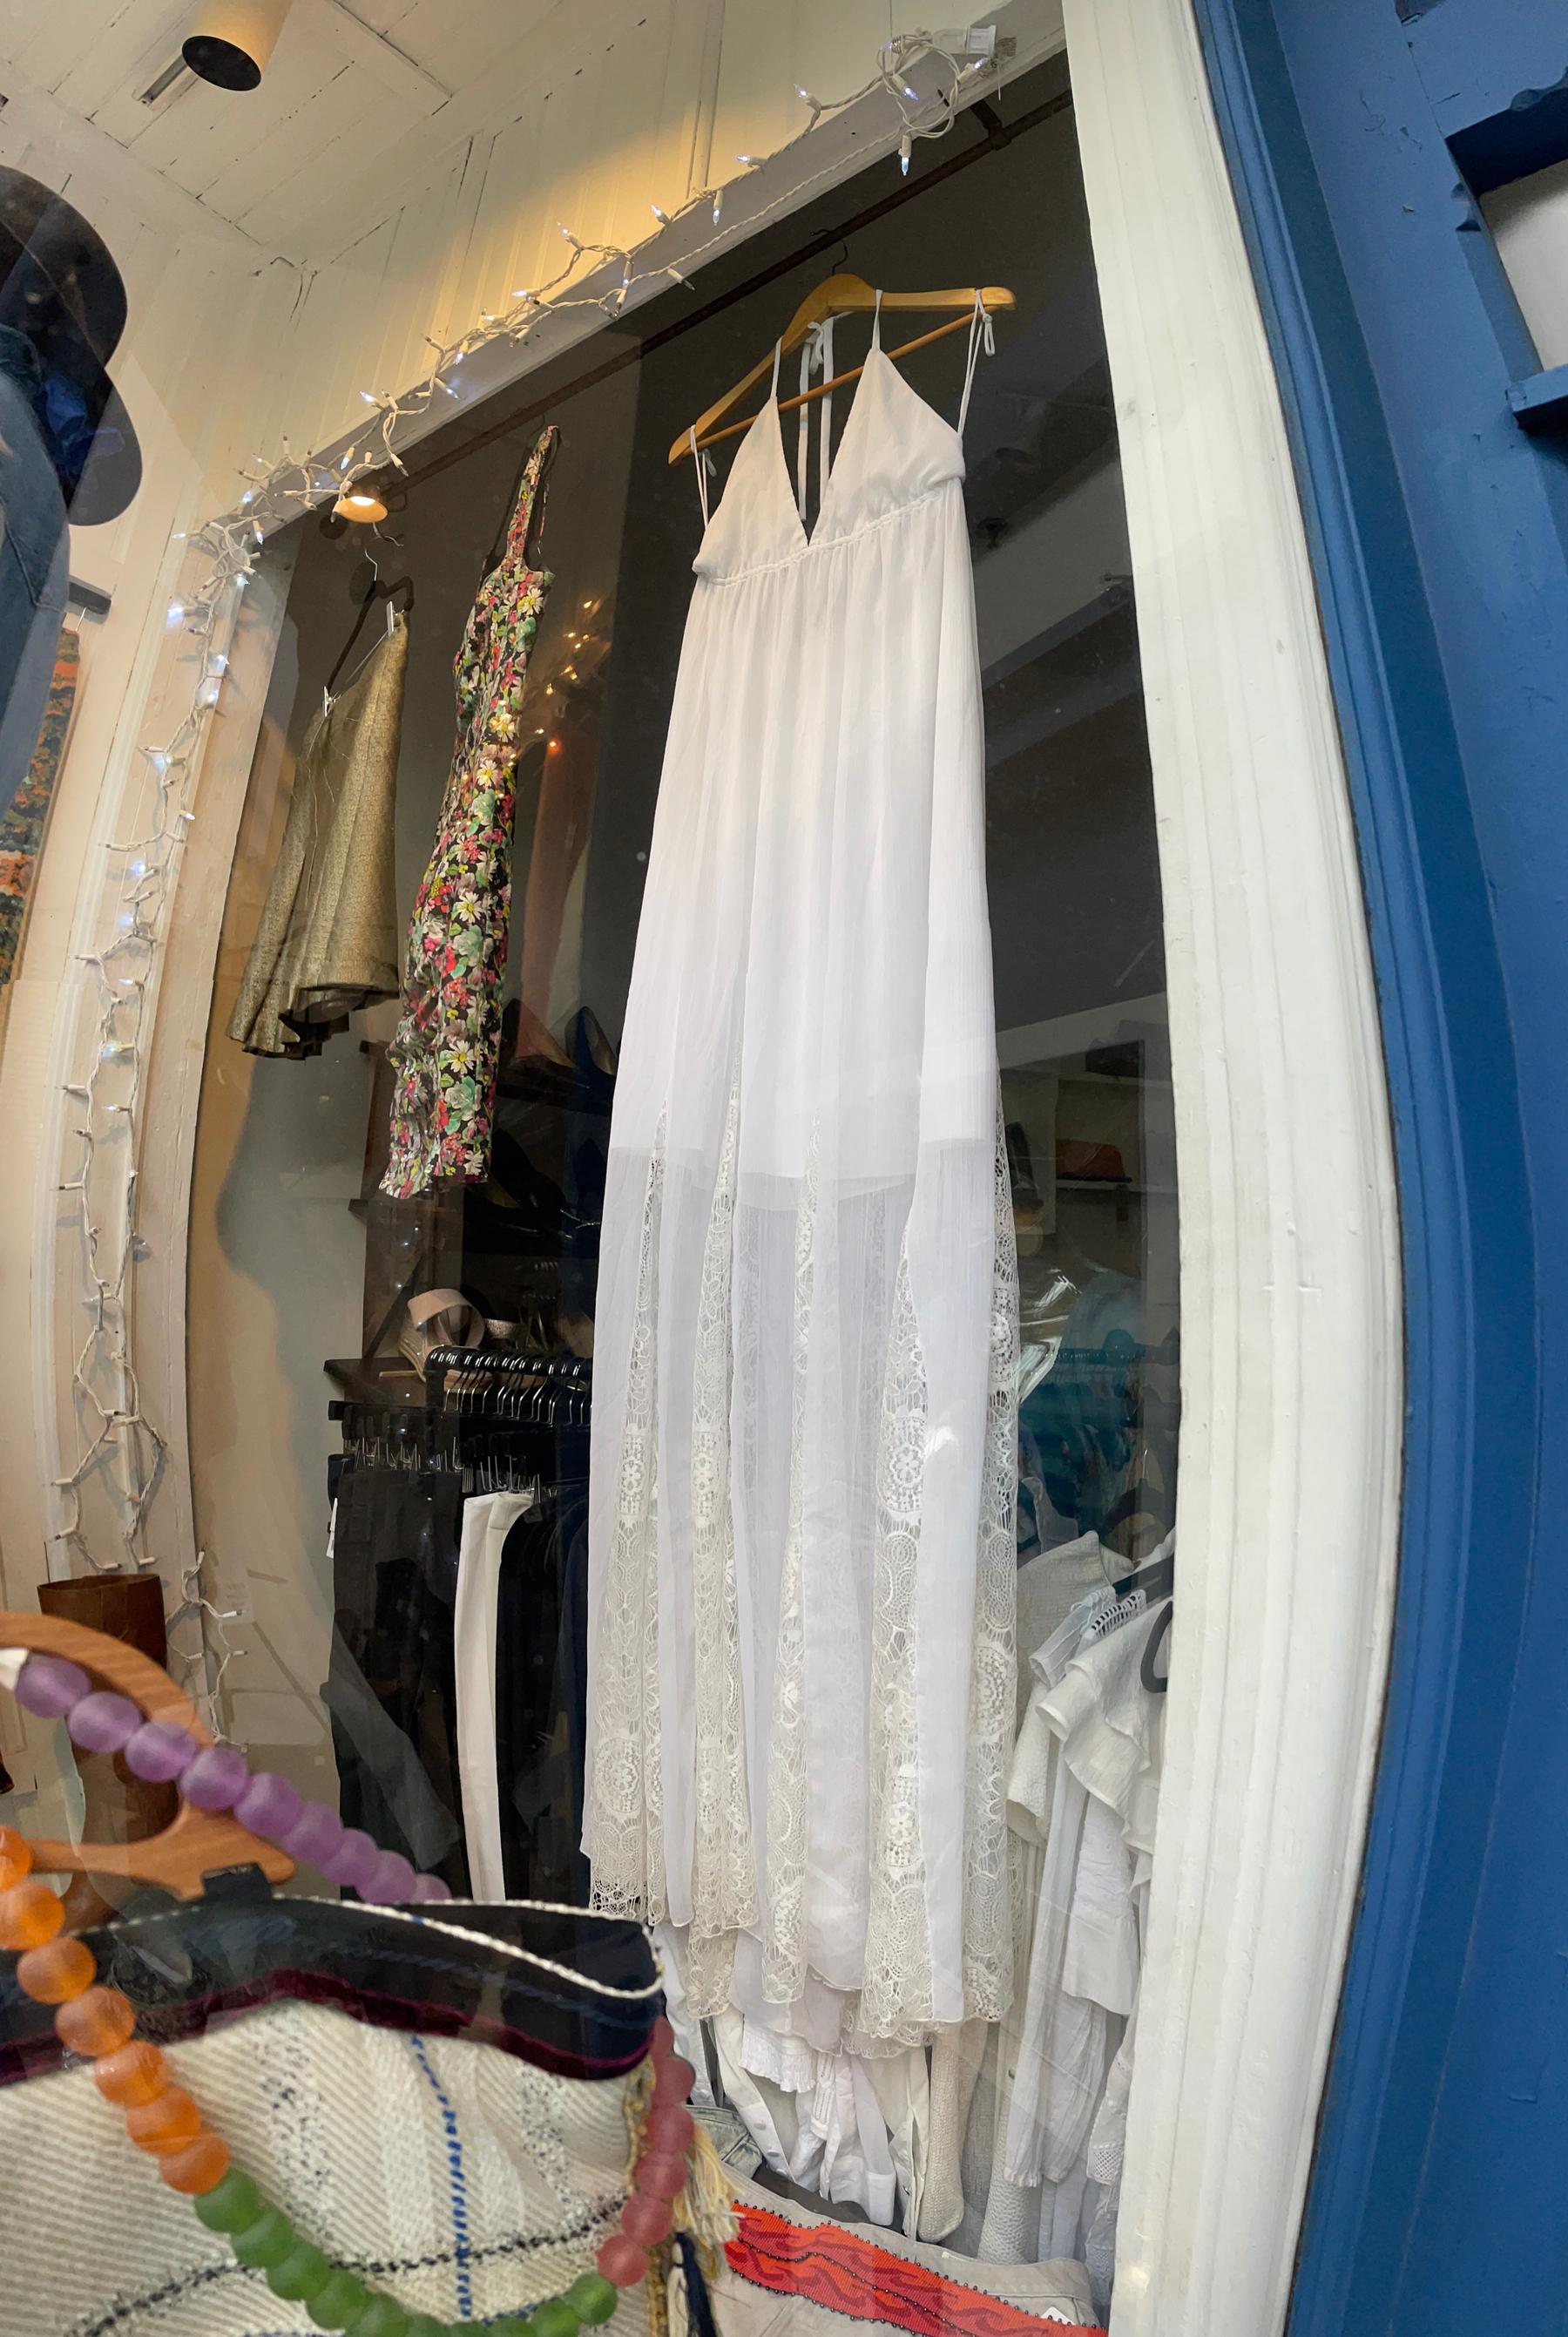 Long white sheer summer dress on display in shop window.